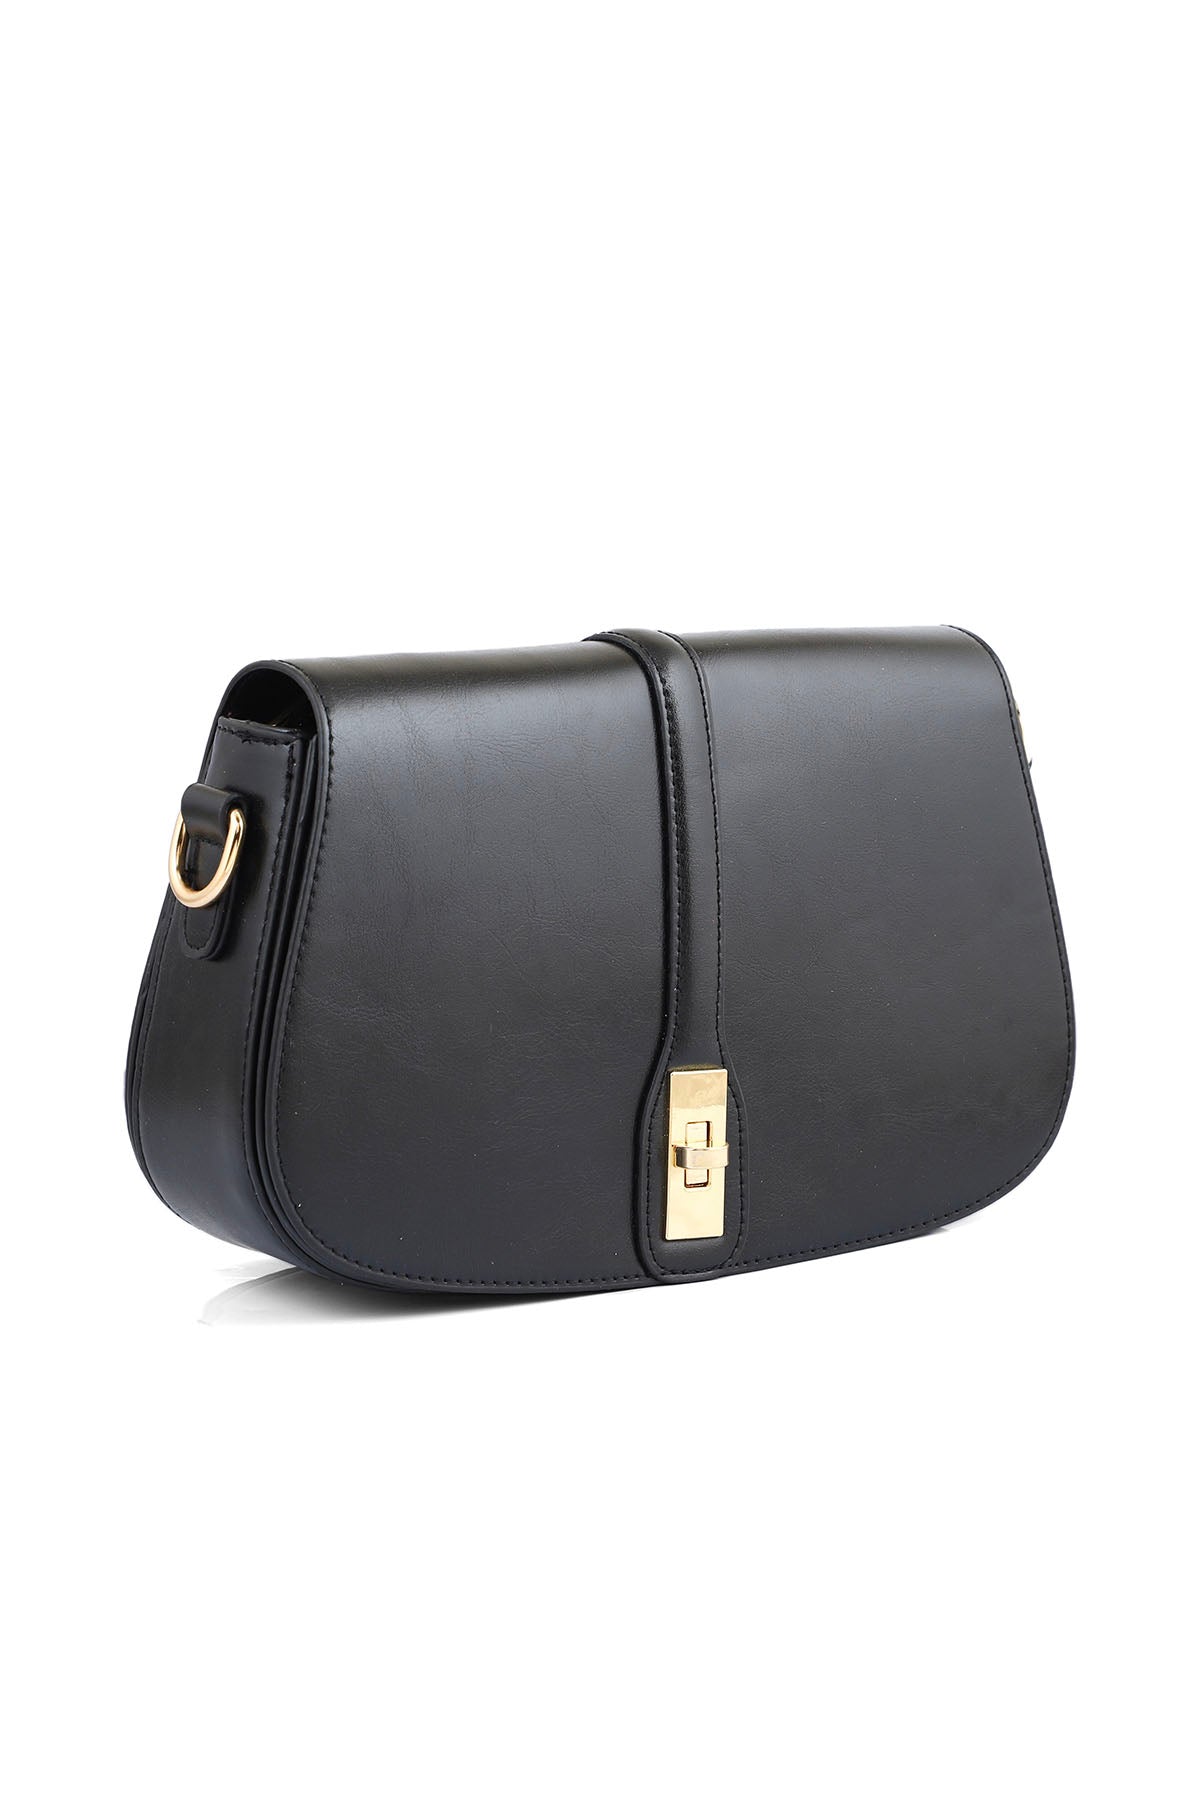 Baguette Shoulder Bags B14977-Black